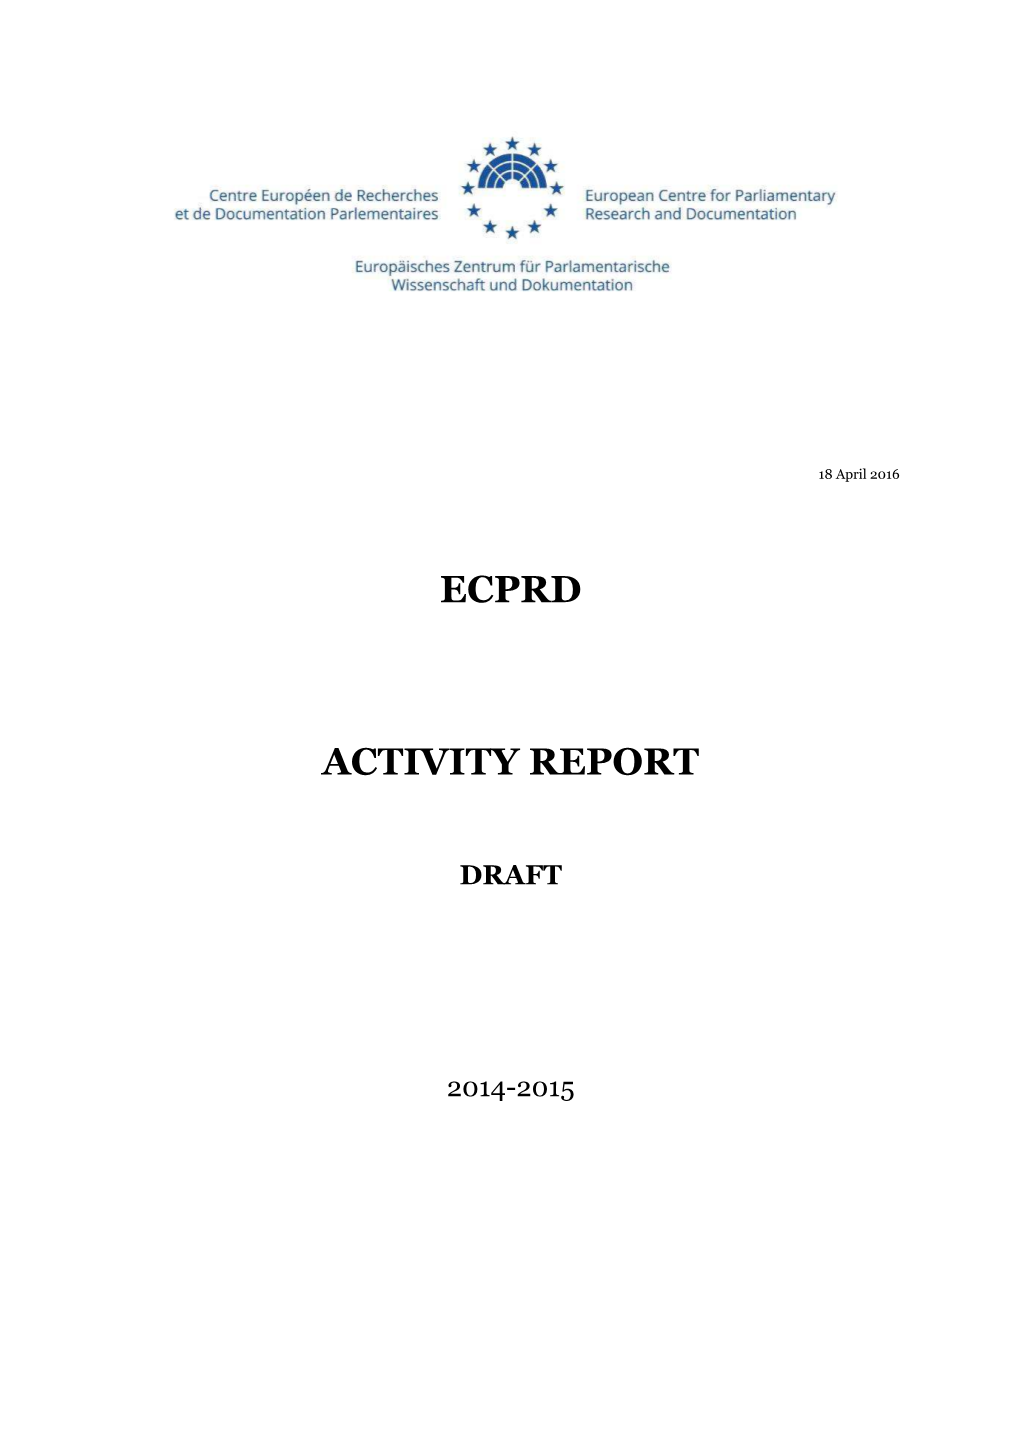 ECPRD Activity Report 2014-2015